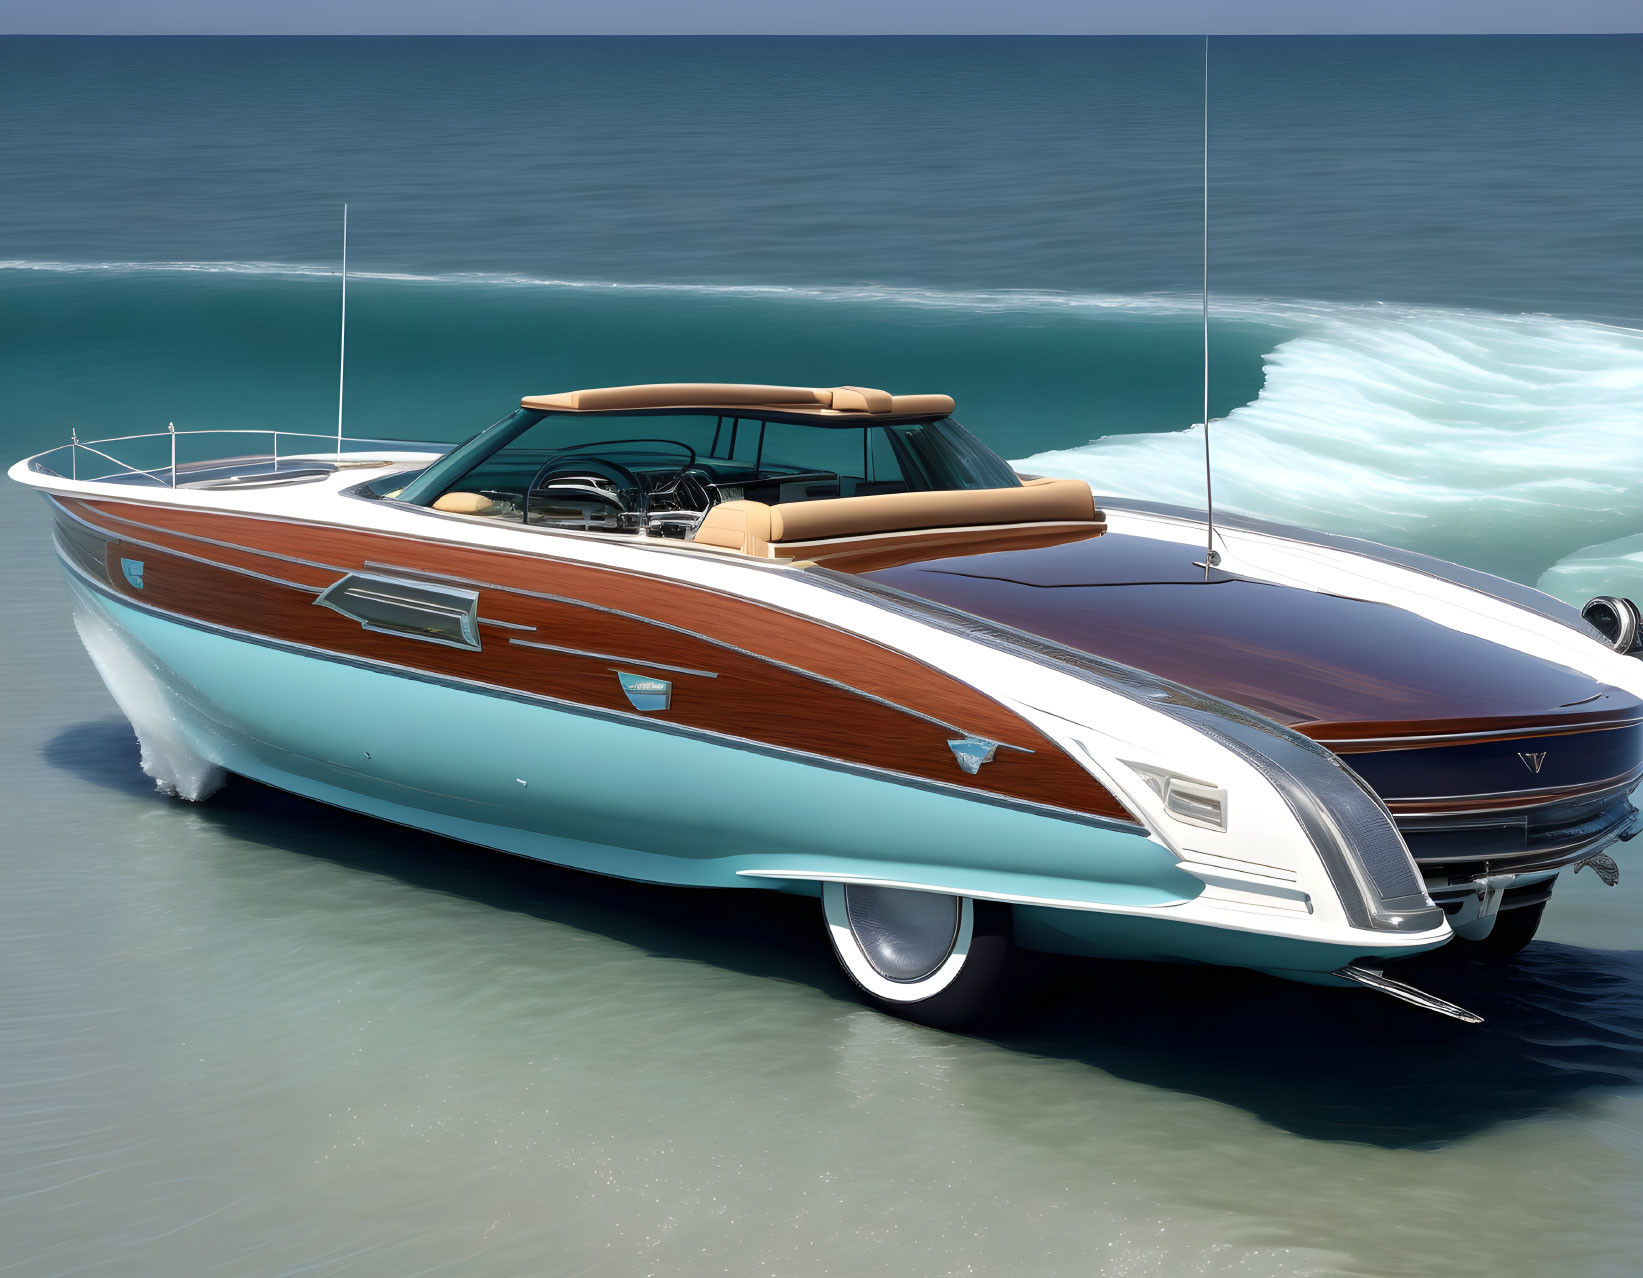 Retro-futuristic boat with car-like design, wood finish, turquoise accents, cruising on blue